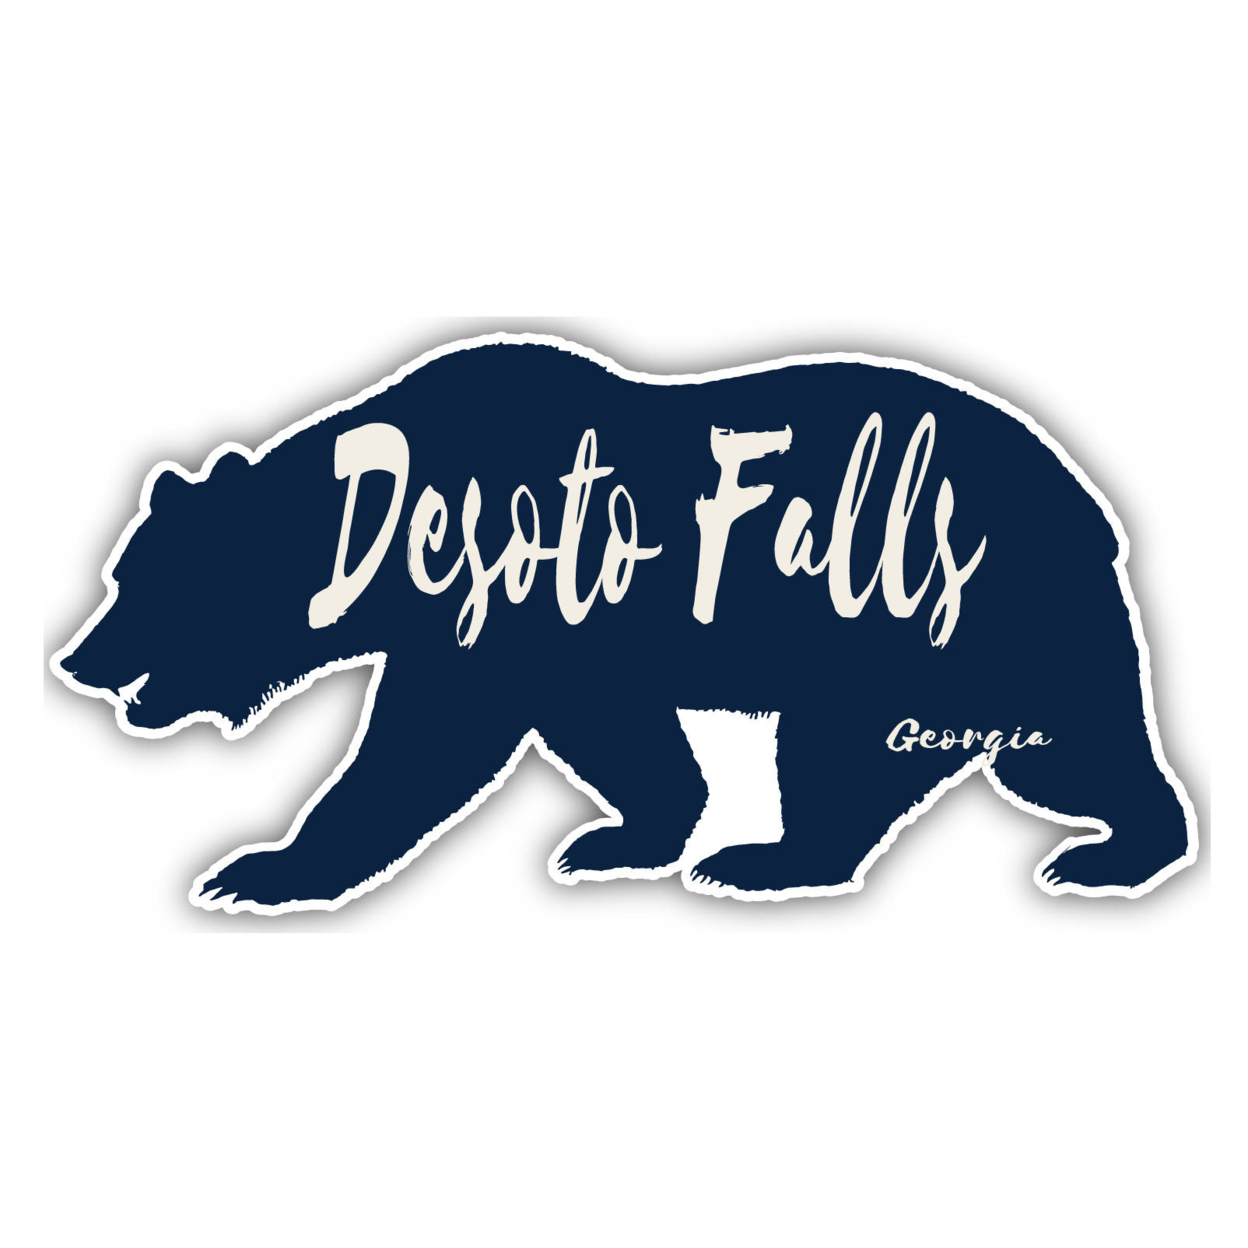 DeSoto Falls Georgia Souvenir Decorative Stickers (Choose Theme And Size) - Single Unit, 4-Inch, Bear